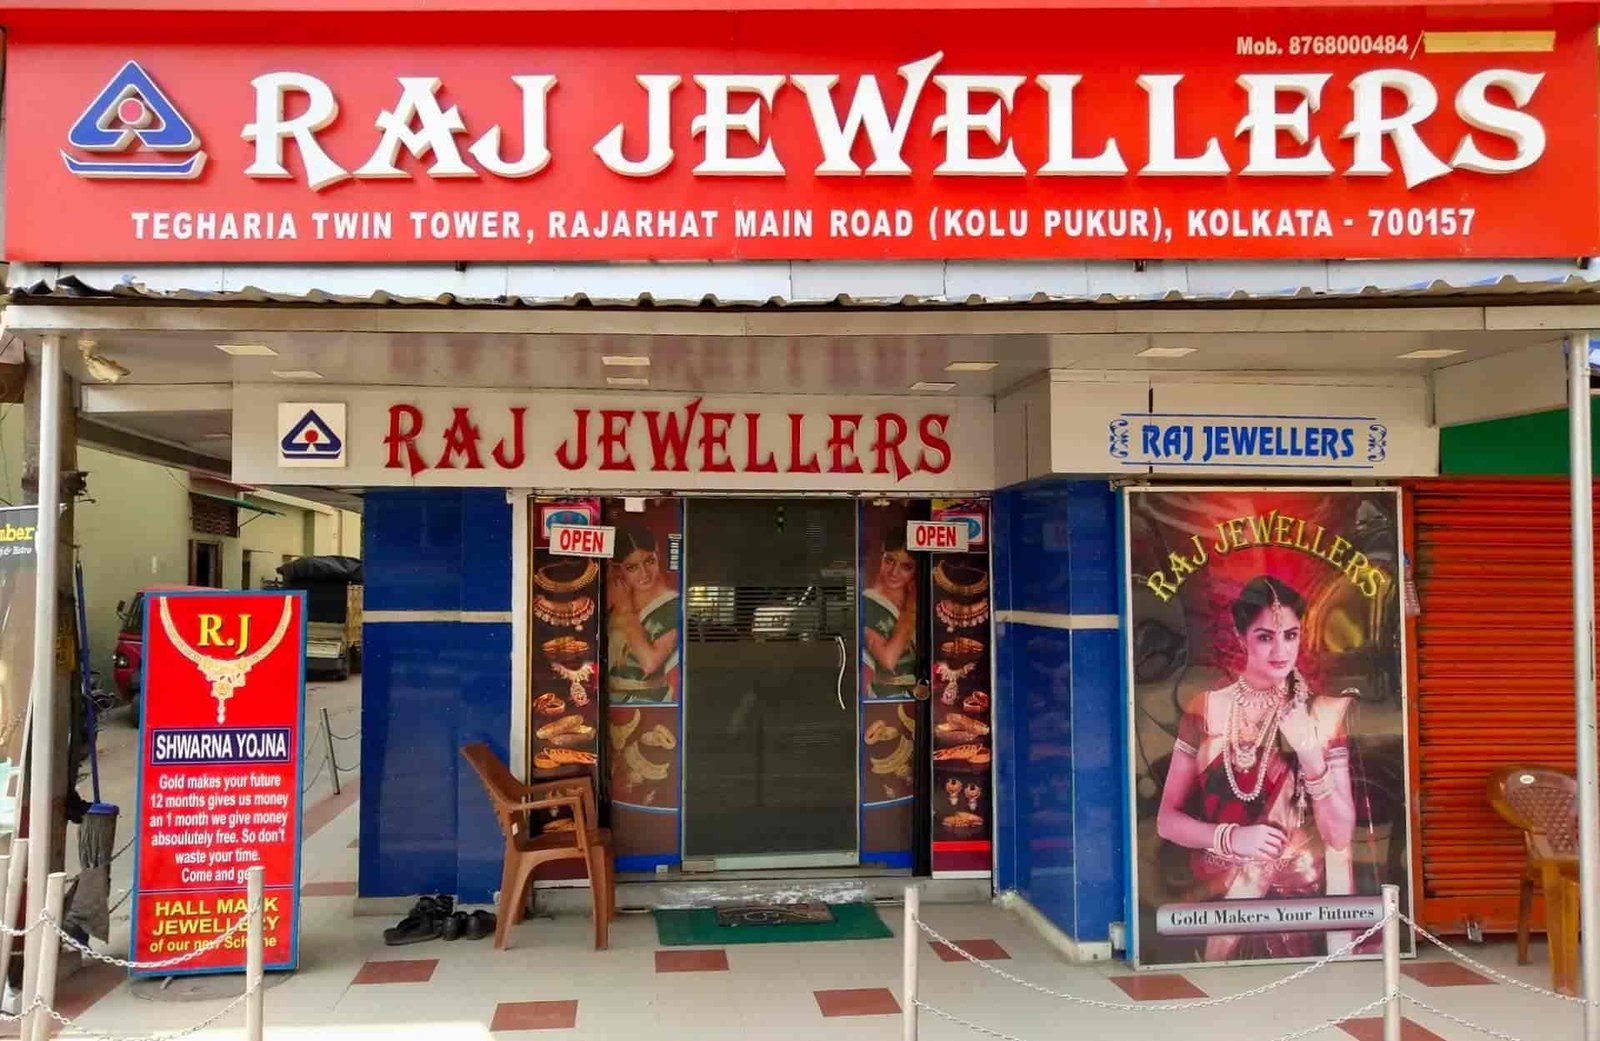 Raj Jewellers